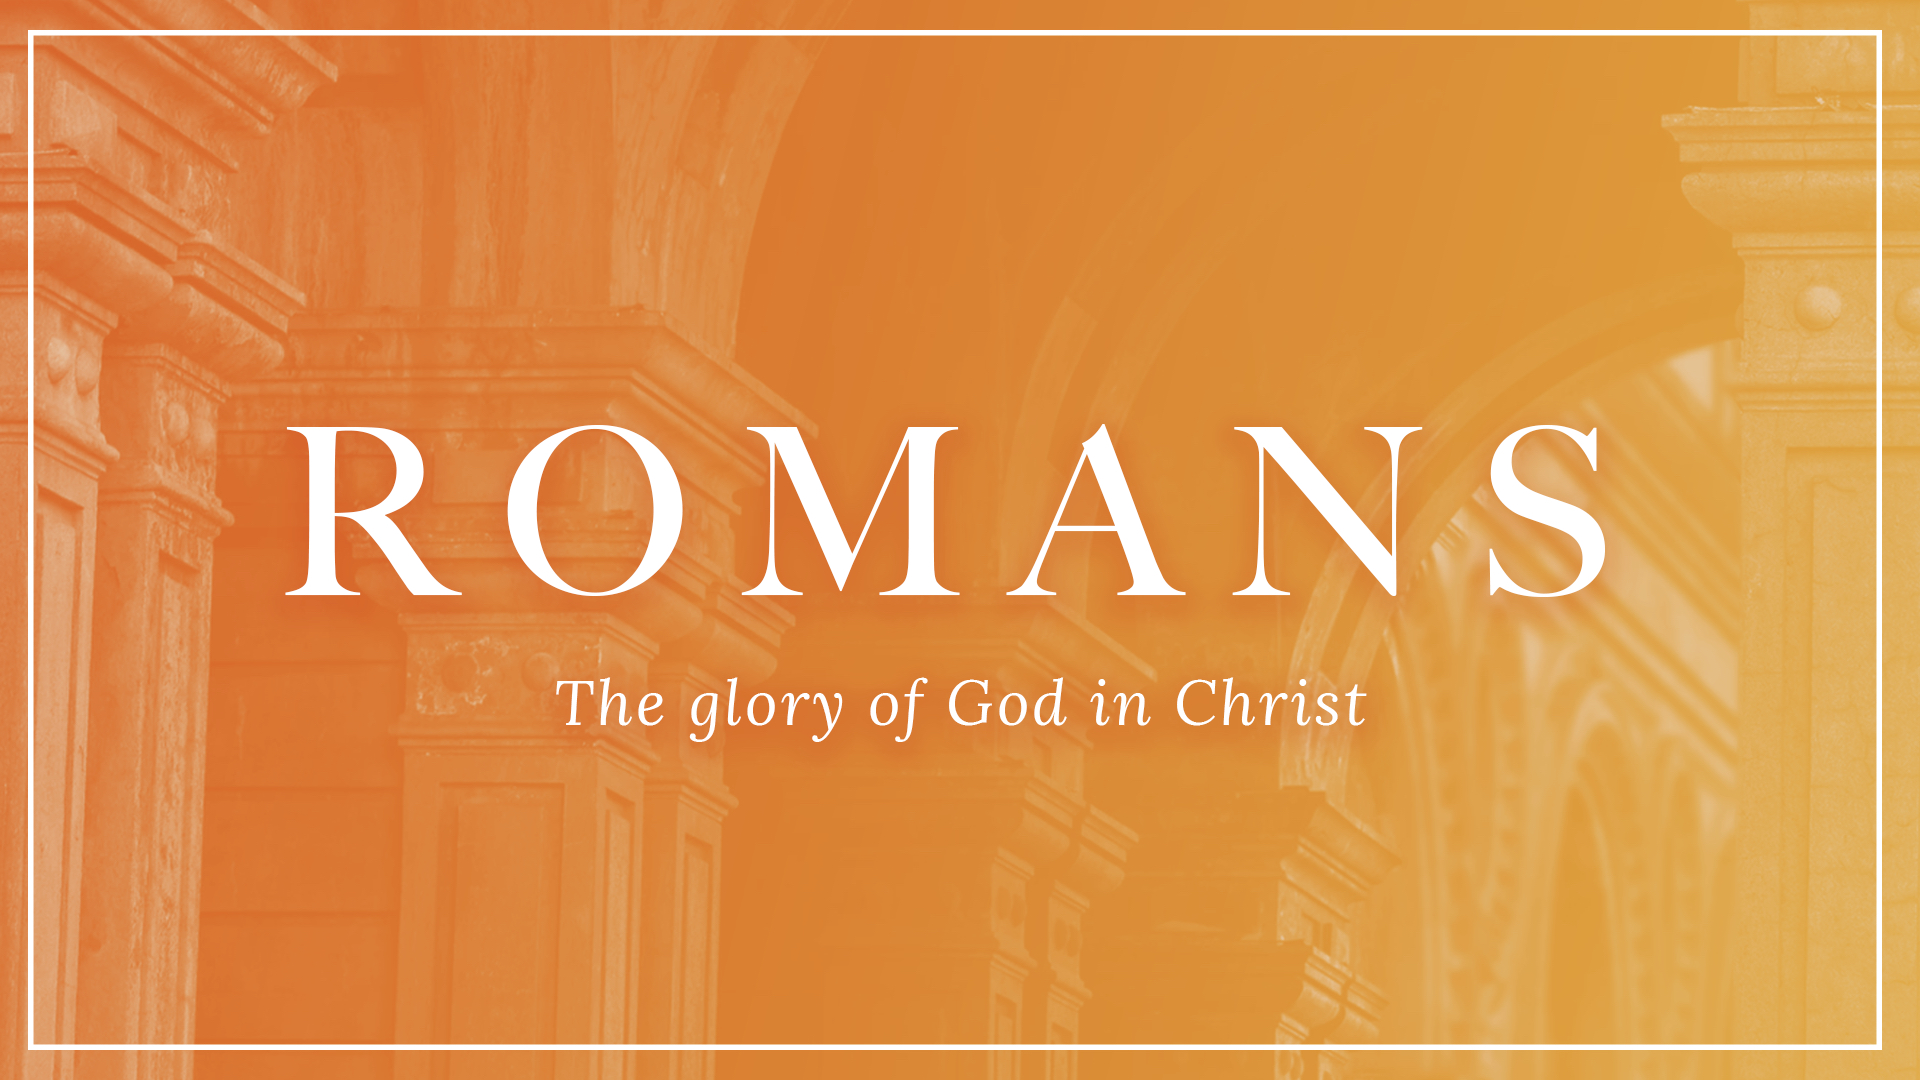 Our Response to God’s Glory Pt 1 – A Sacrificial Life